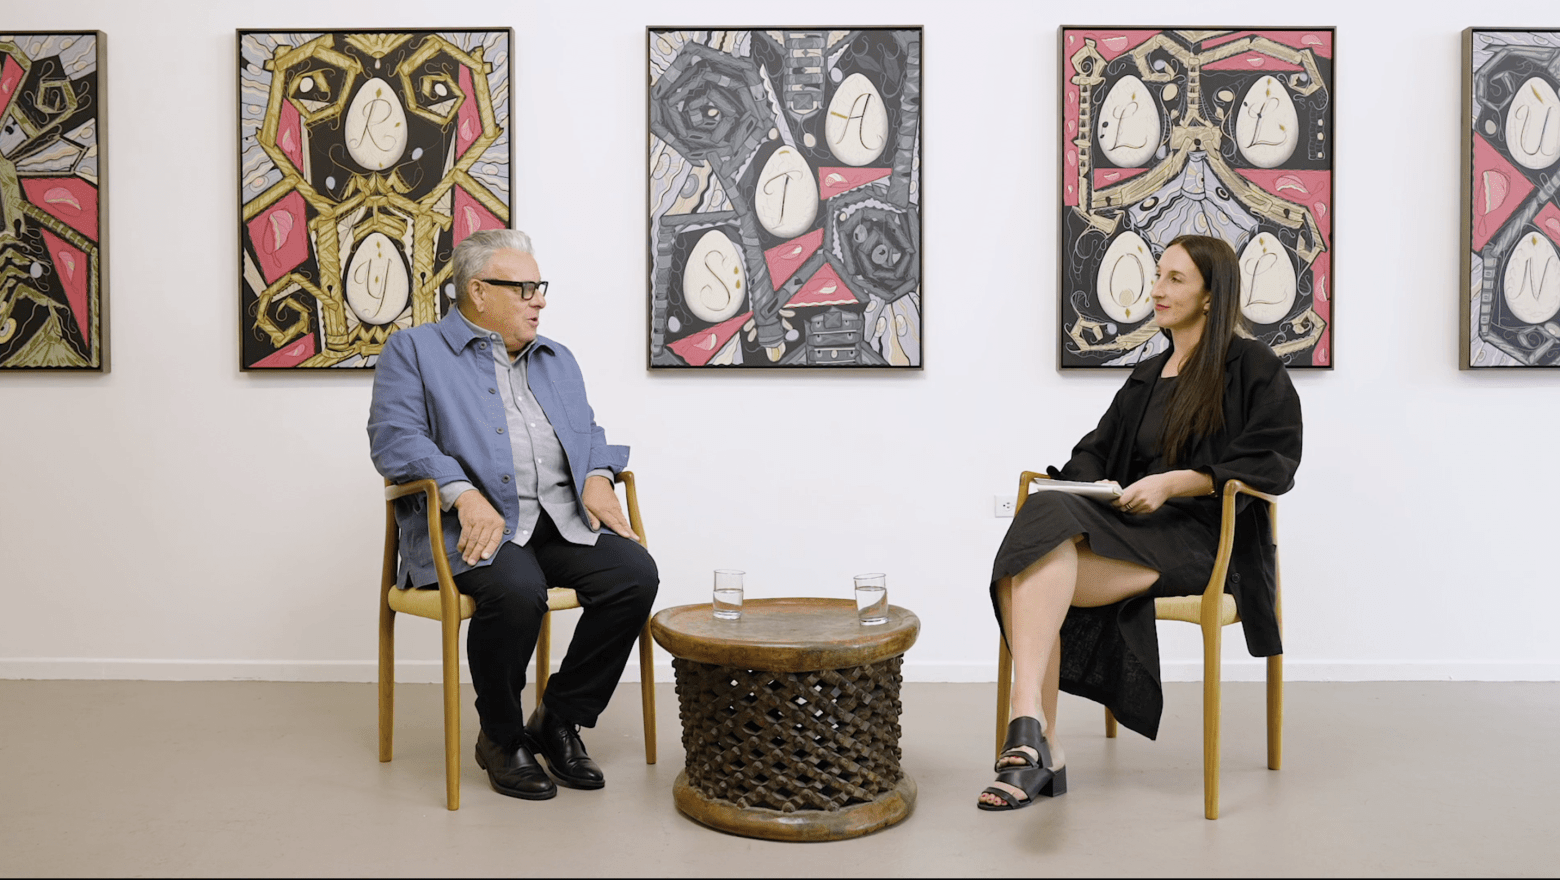 Lari Pittman in Conversation with Diana Nawi